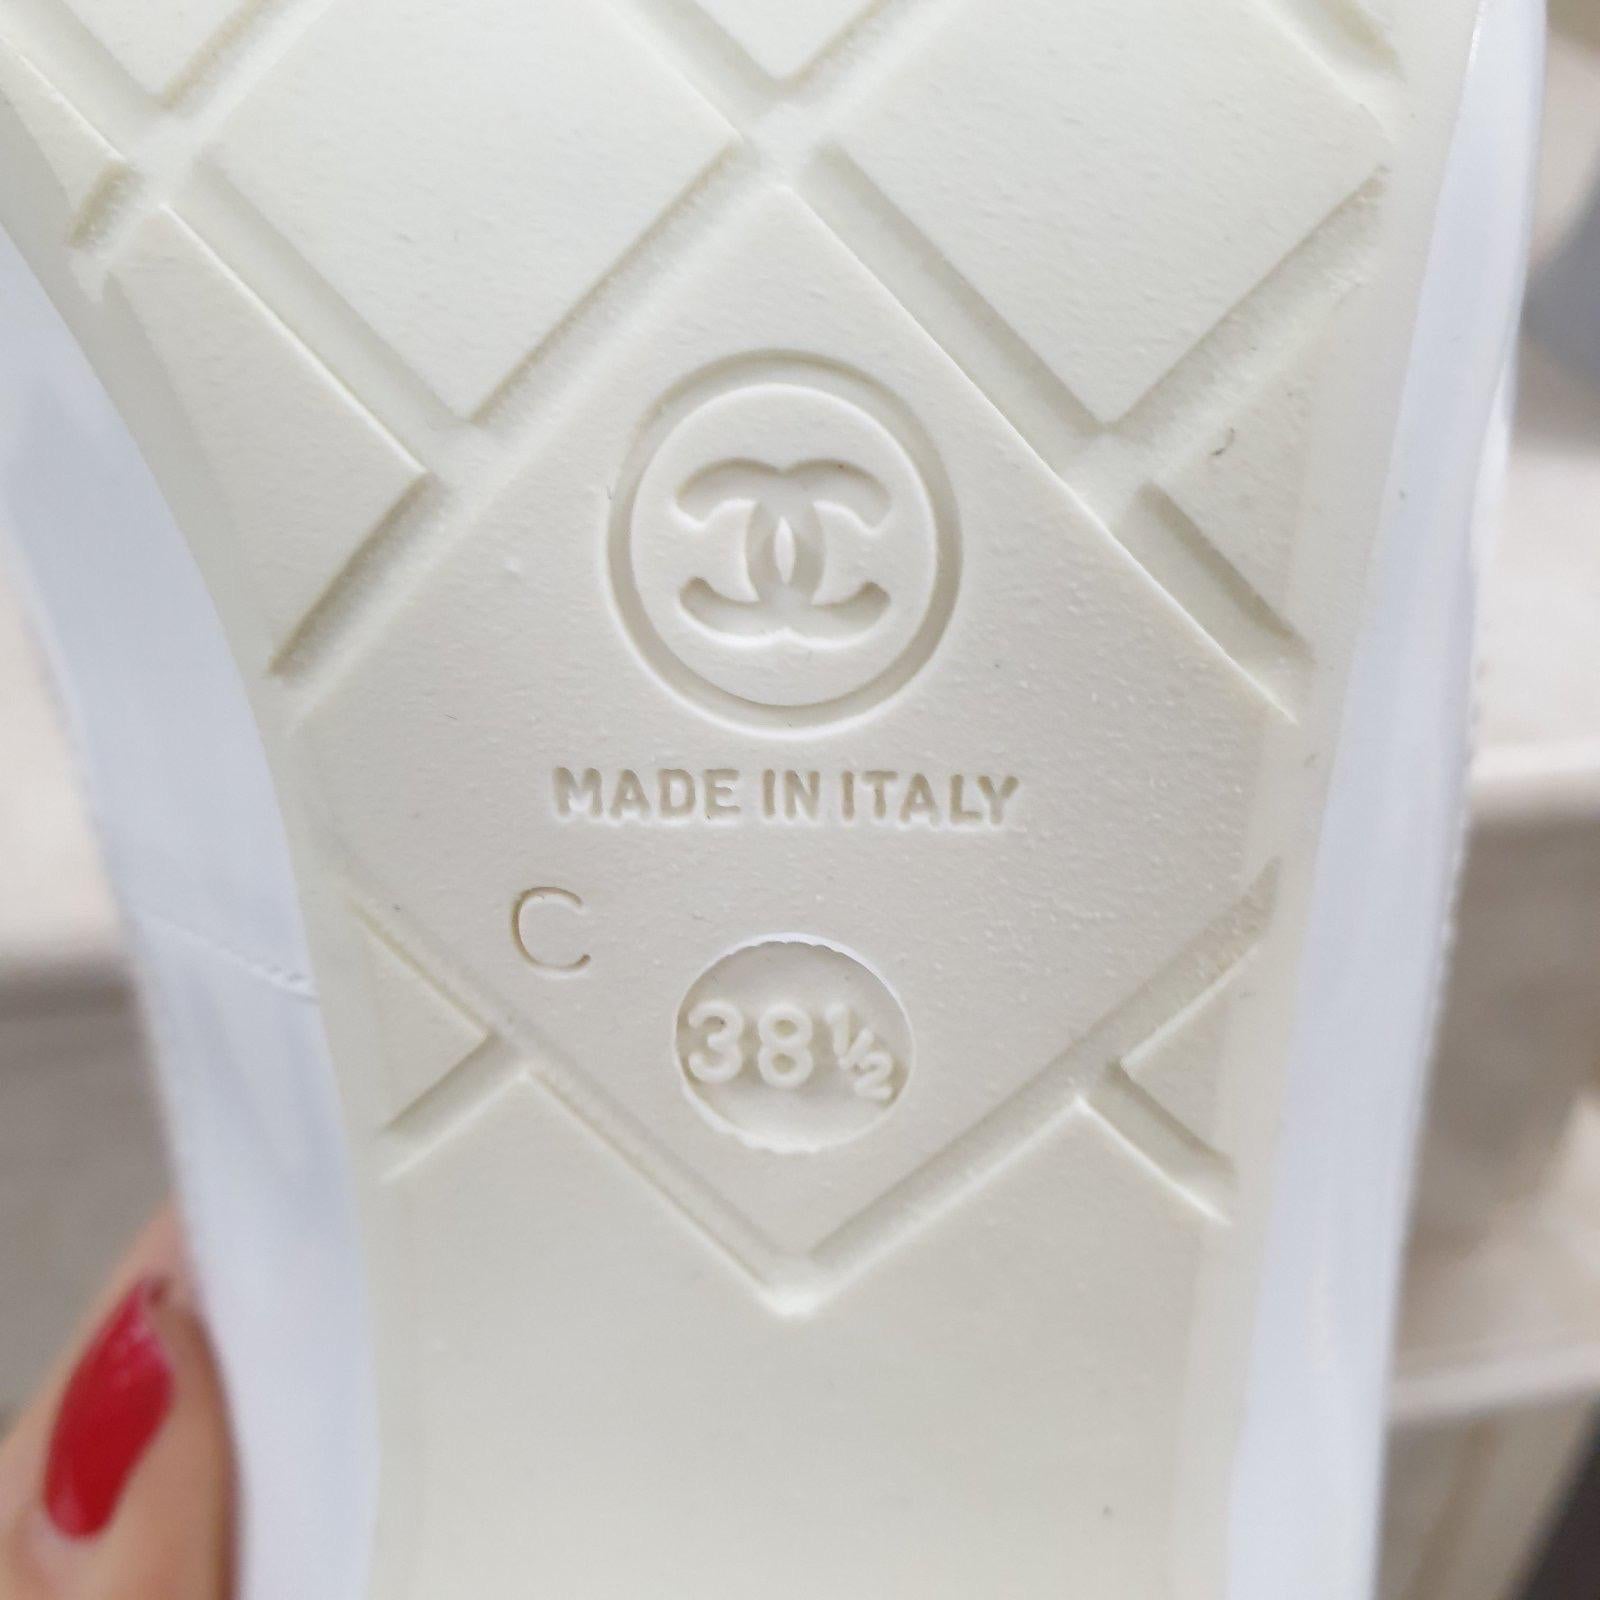 CHANEL Paris Dubai White Patent Leather Knitted Pumps Heels 2